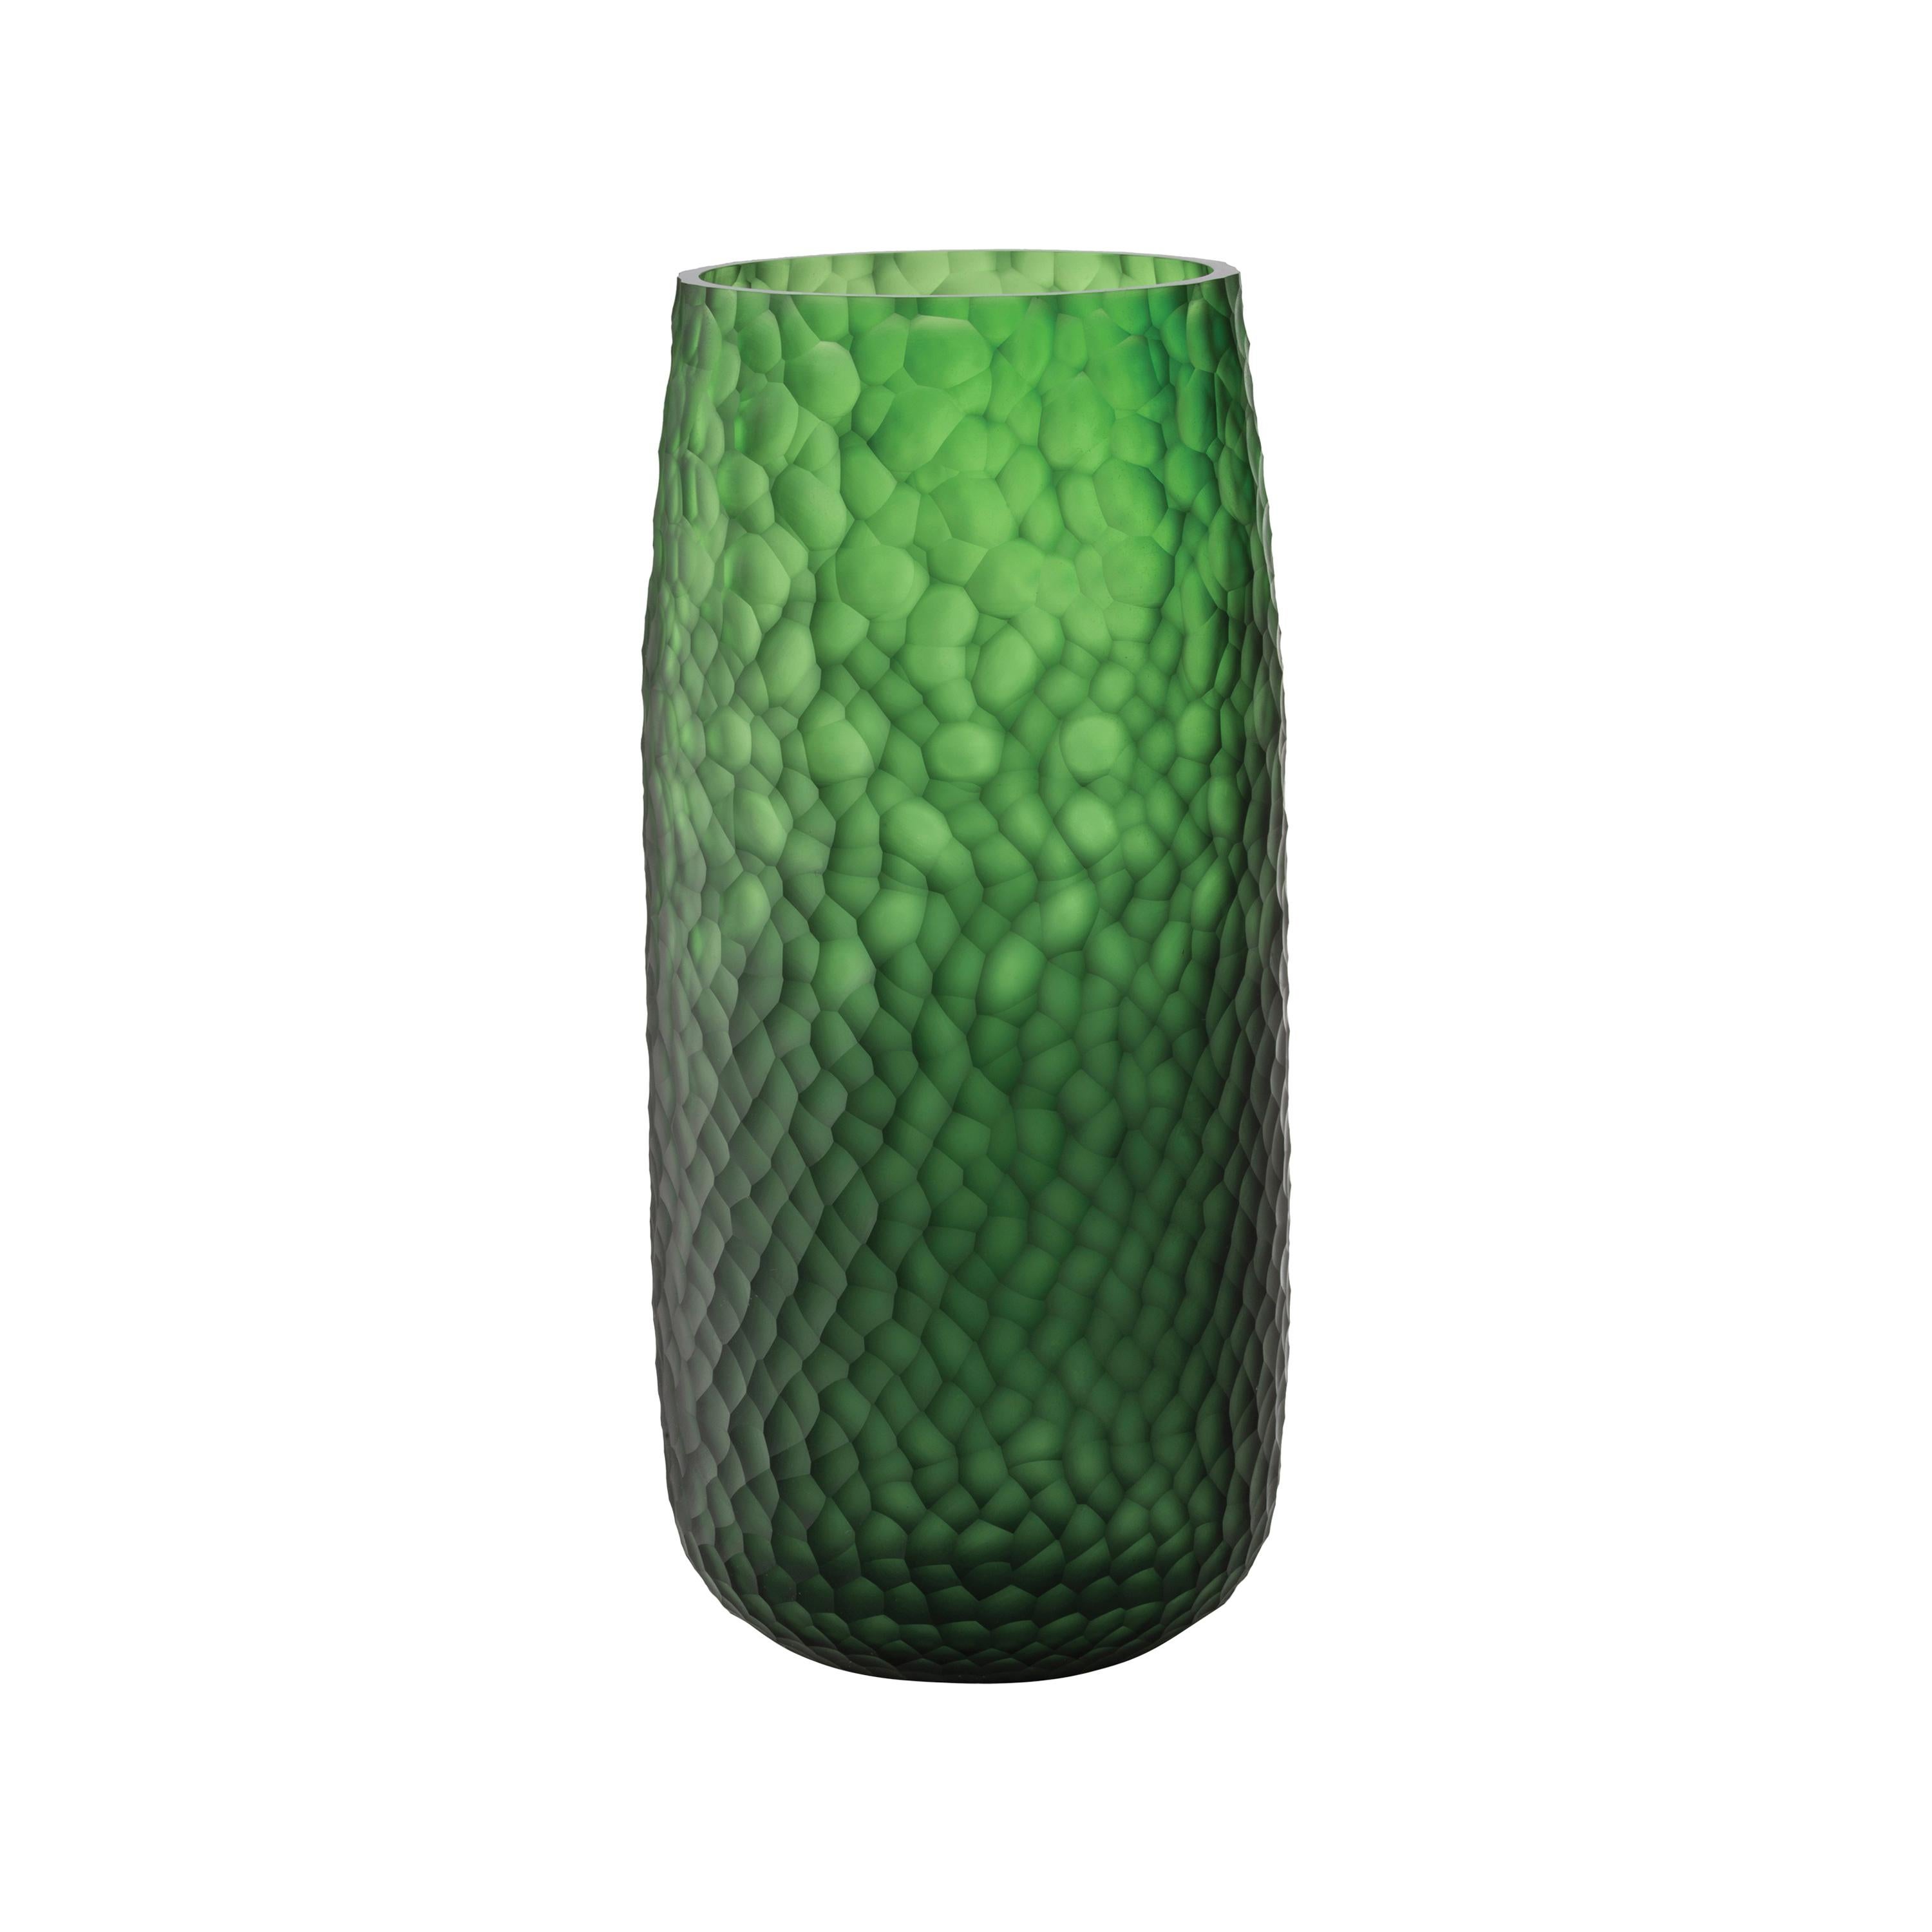 Salviati Large Battuti Vase in Green Glass For Sale